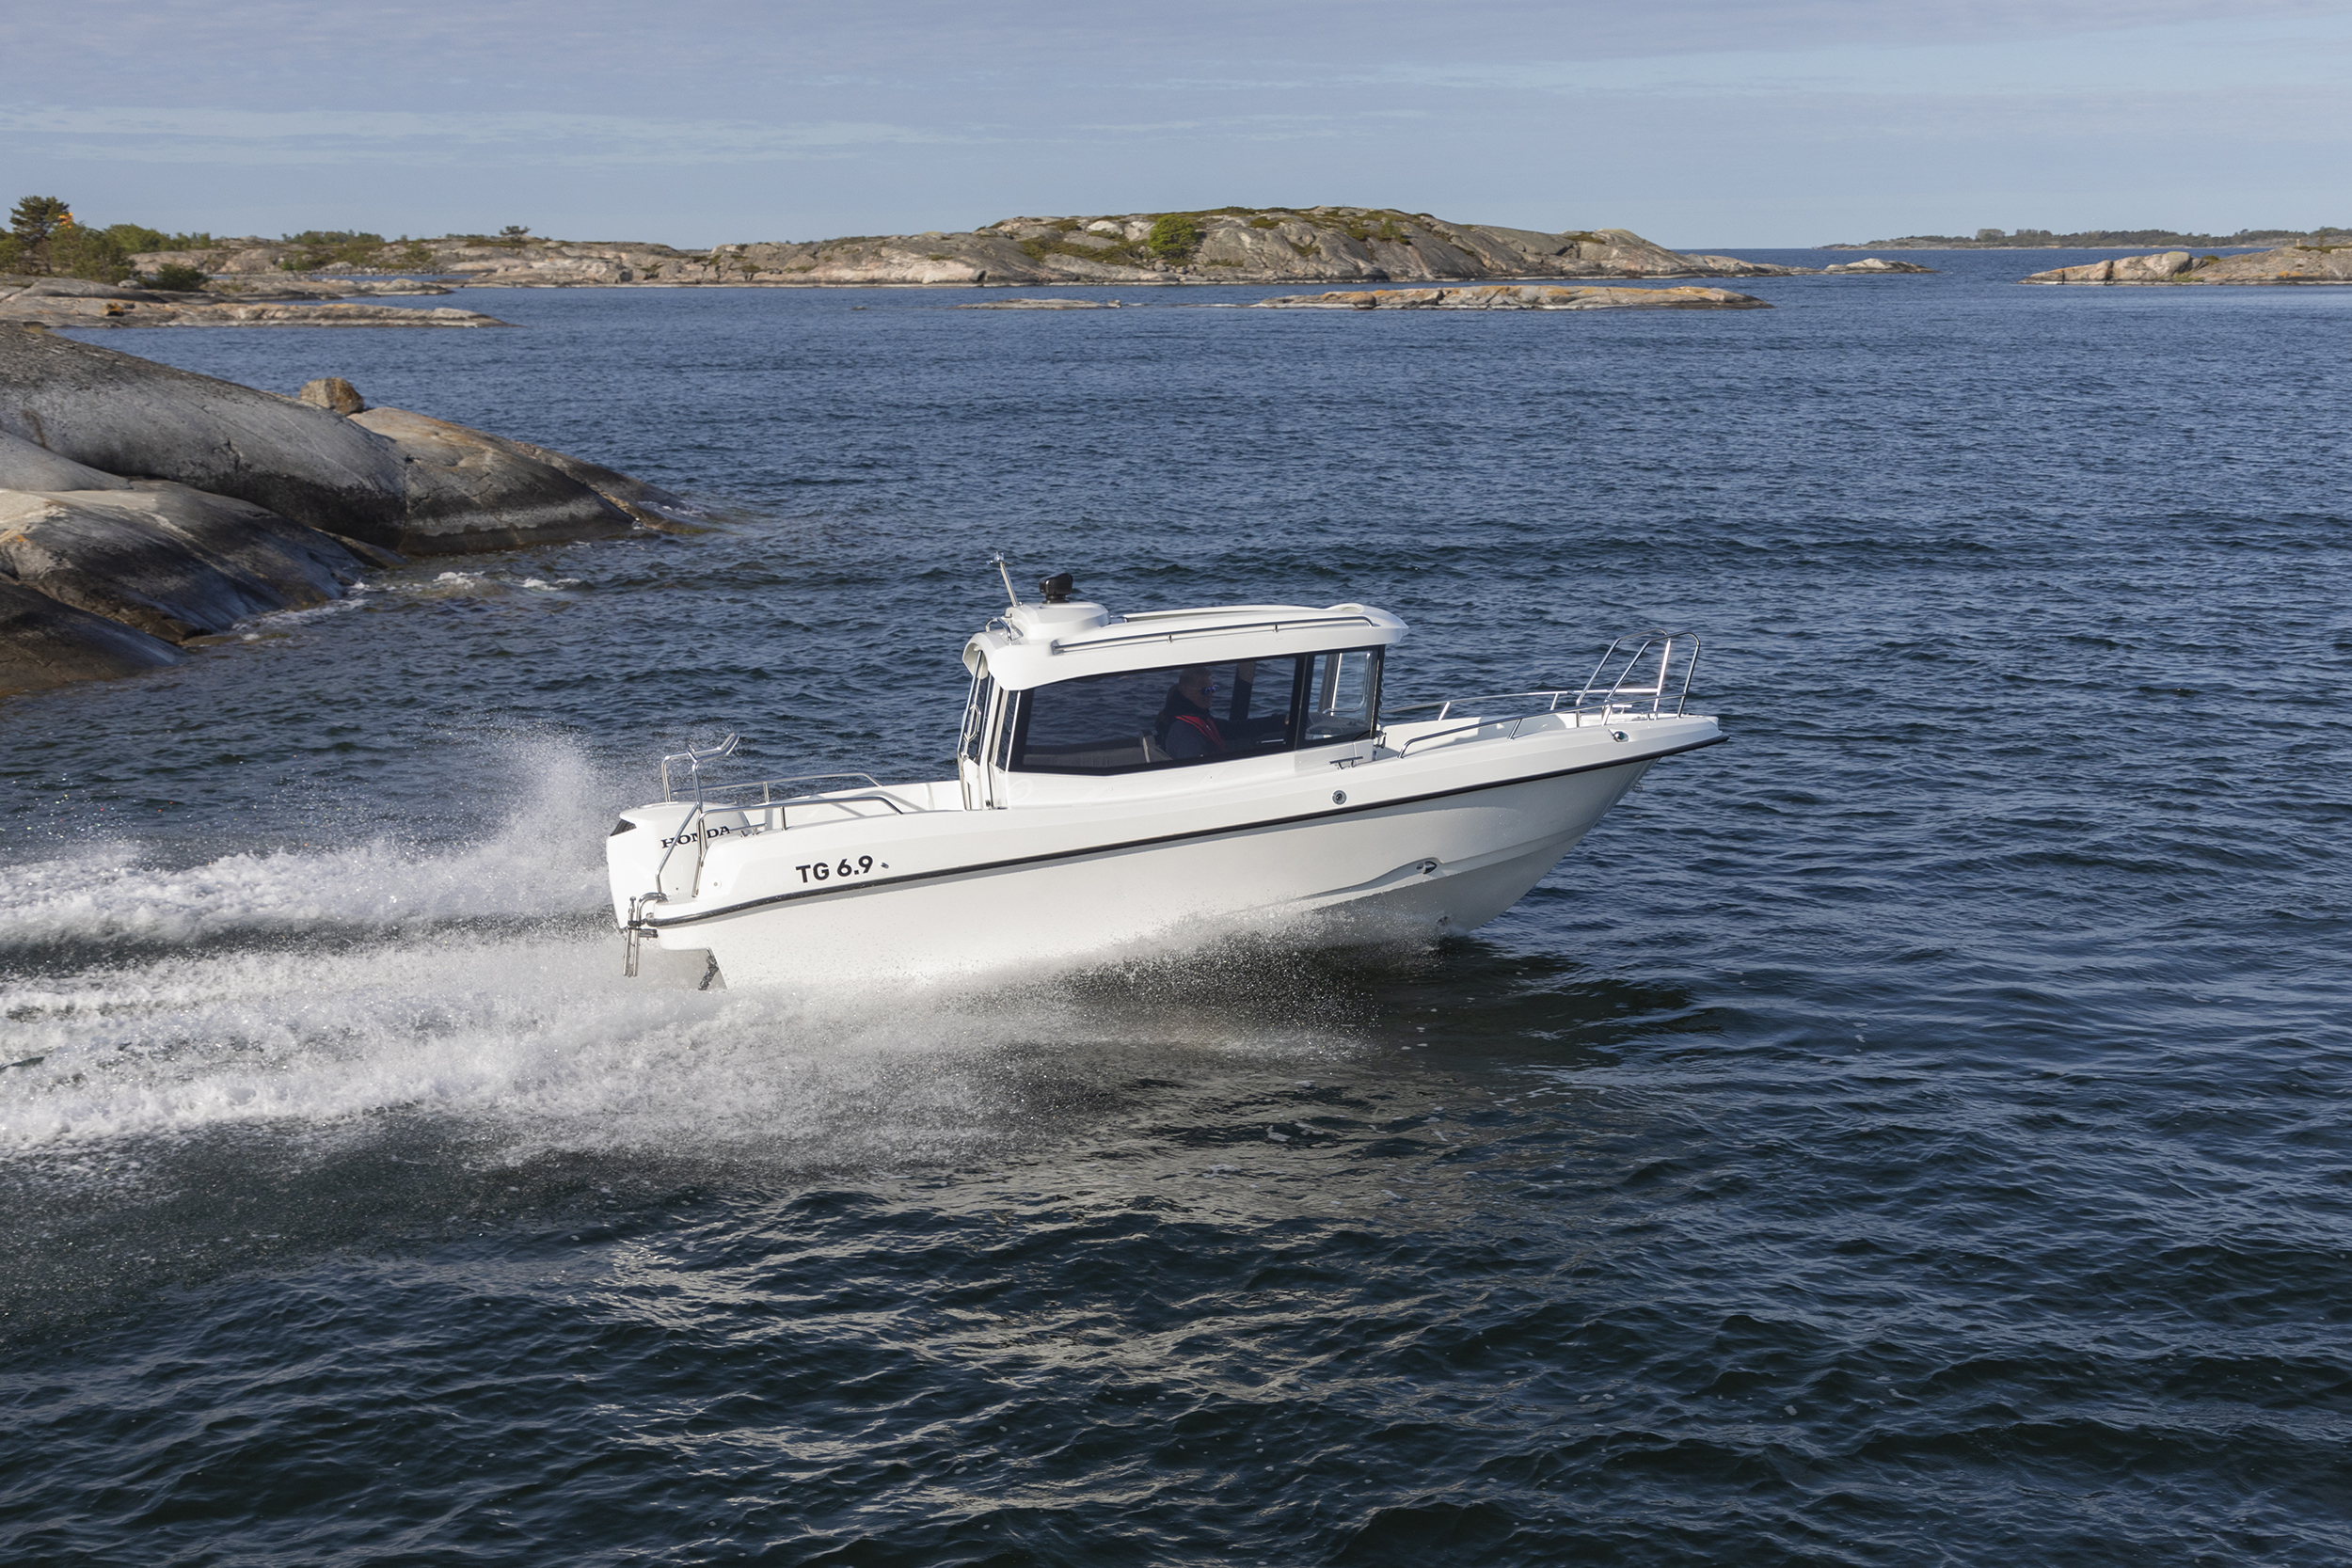 TG 6.9 cabin boat driving in Finnish archipelago.